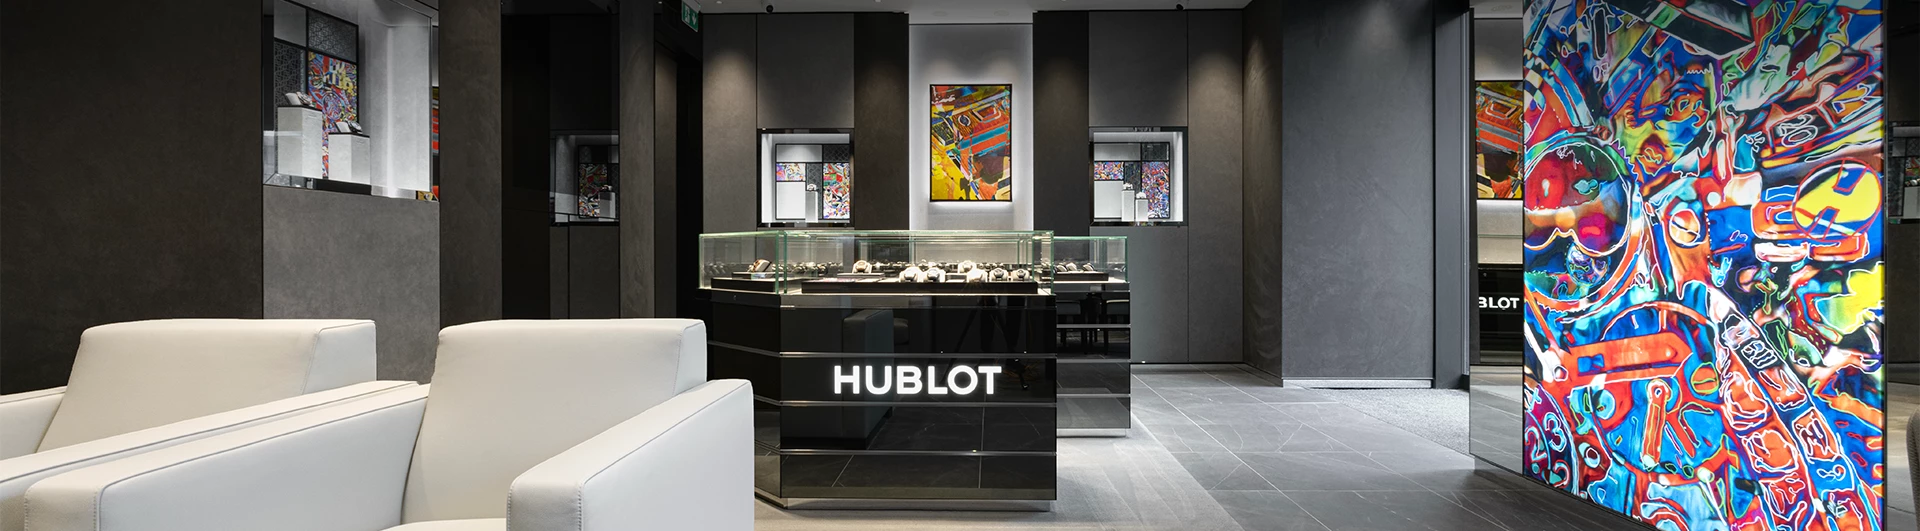 Inside the Hublot Edinburgh shop-in-shop